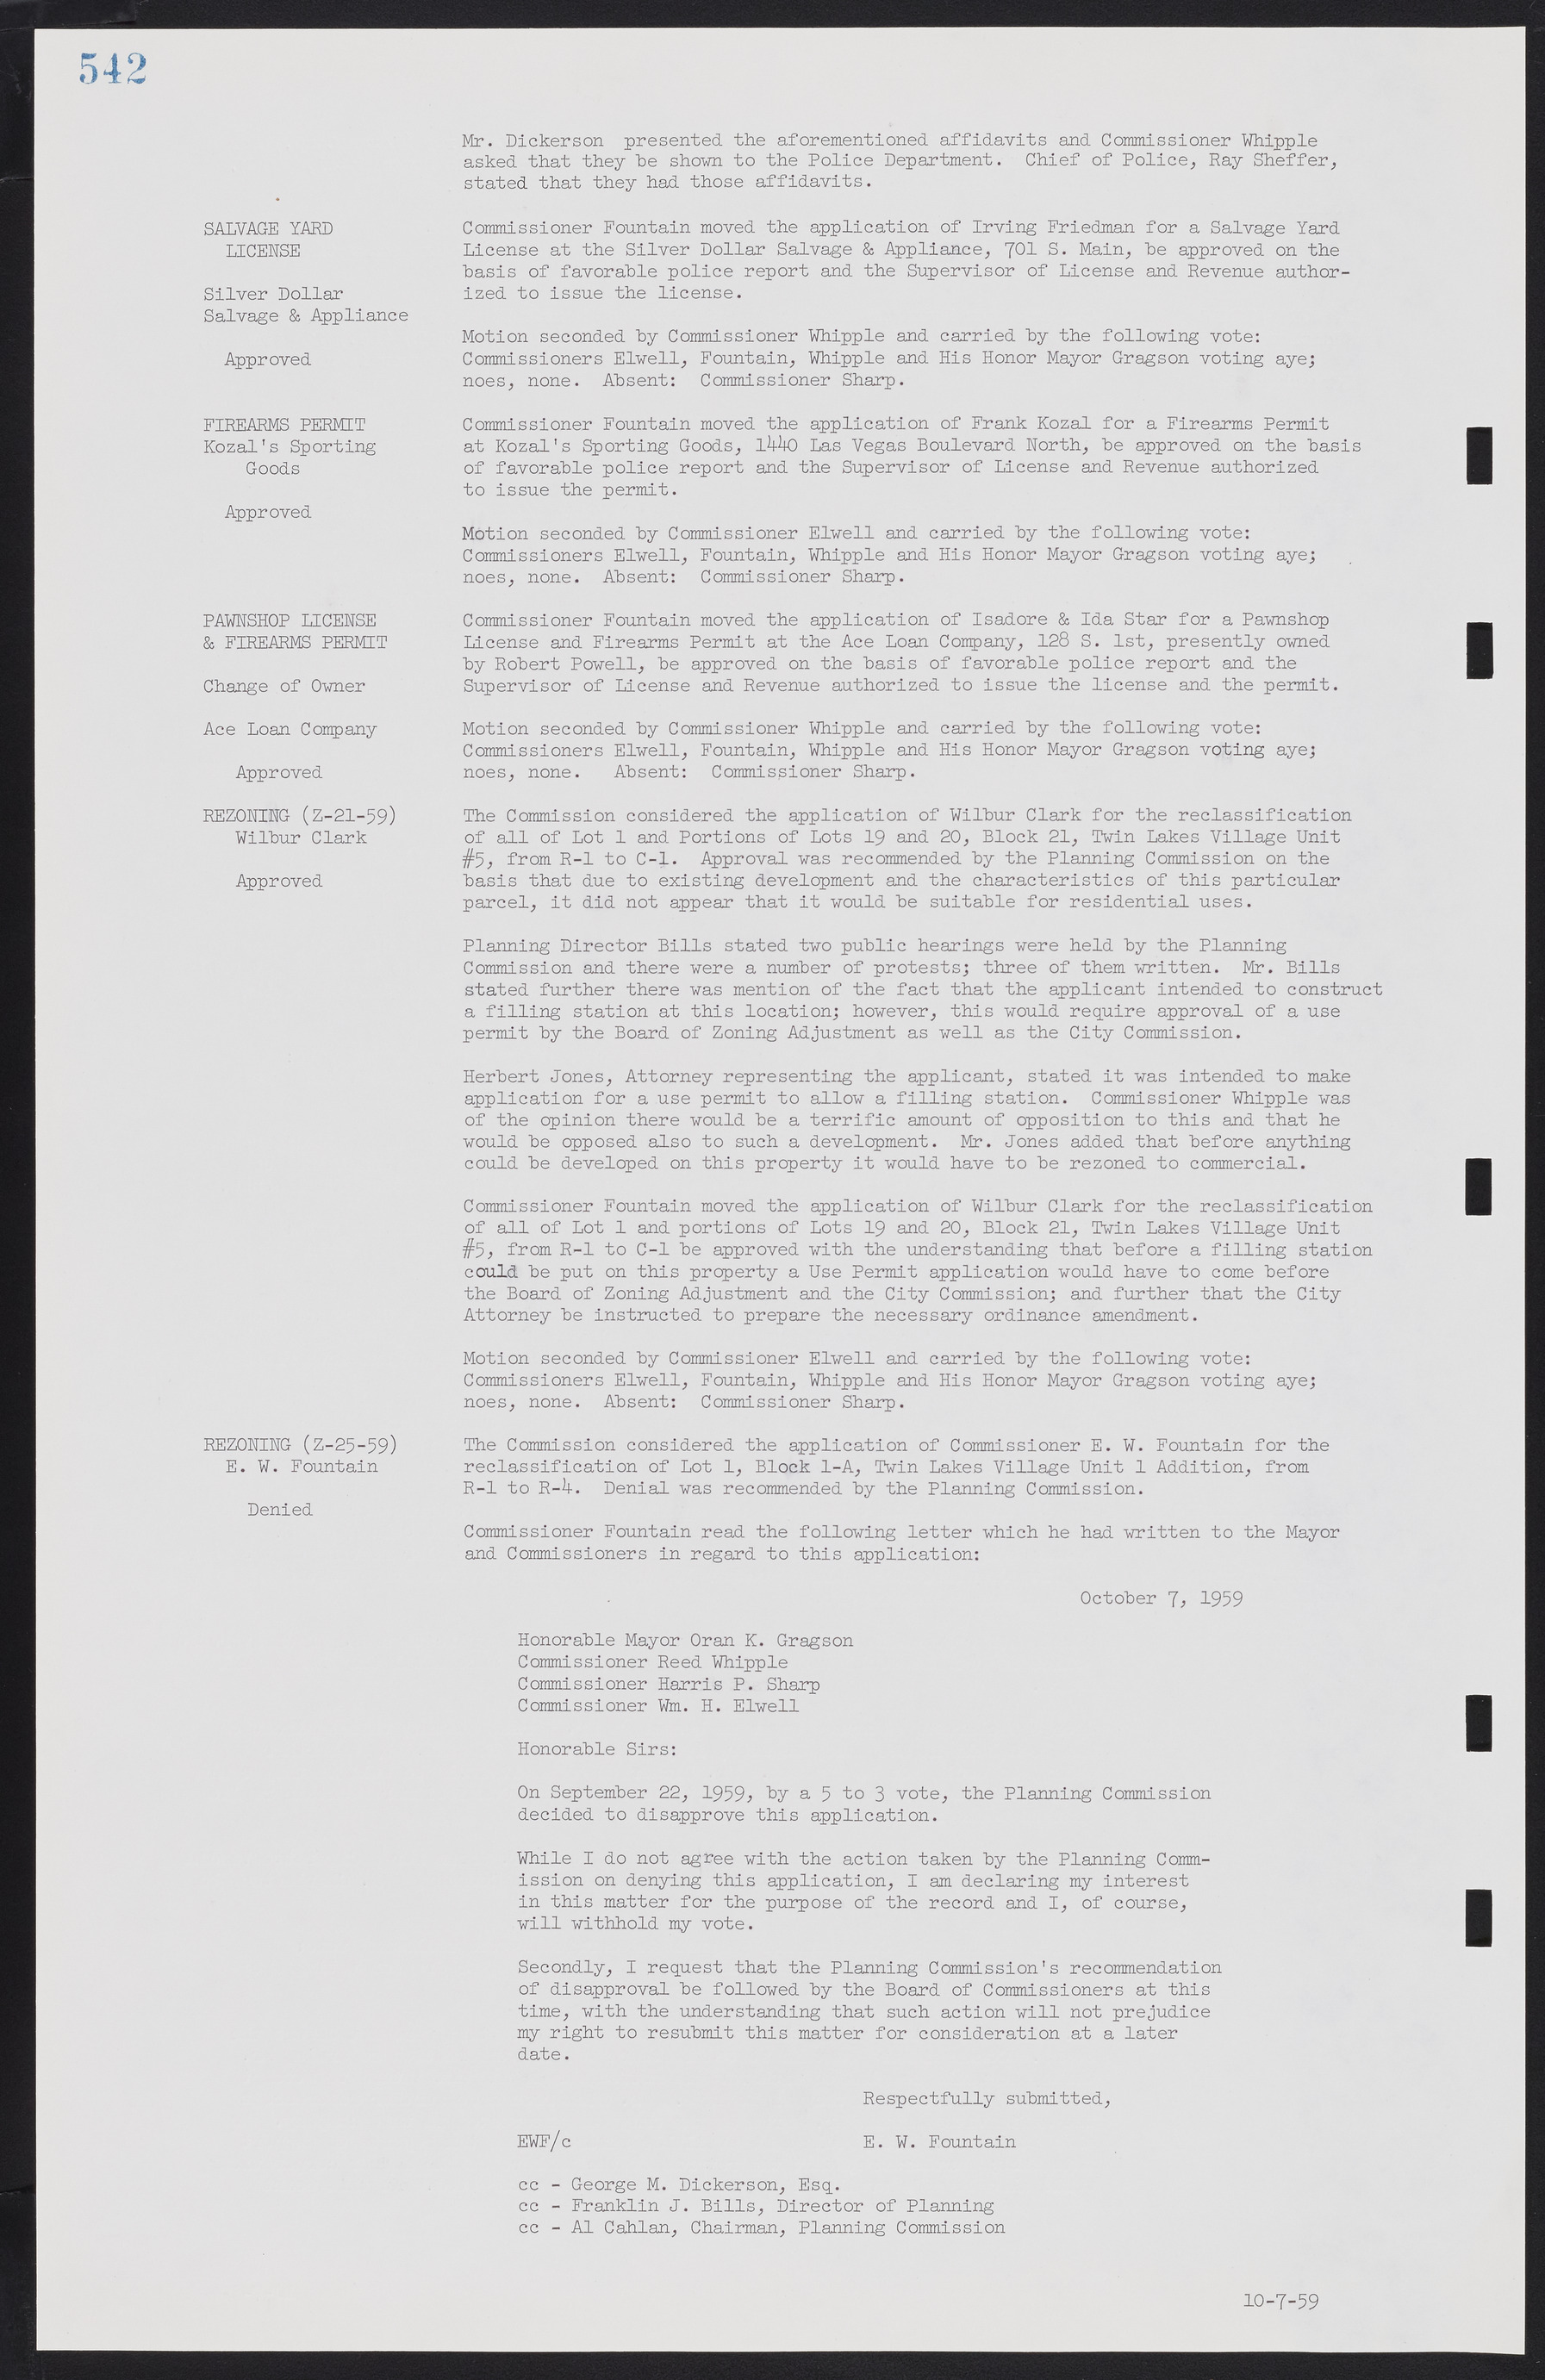 Las Vegas City Commission Minutes, November 20, 1957 to December 2, 1959, lvc000011-578